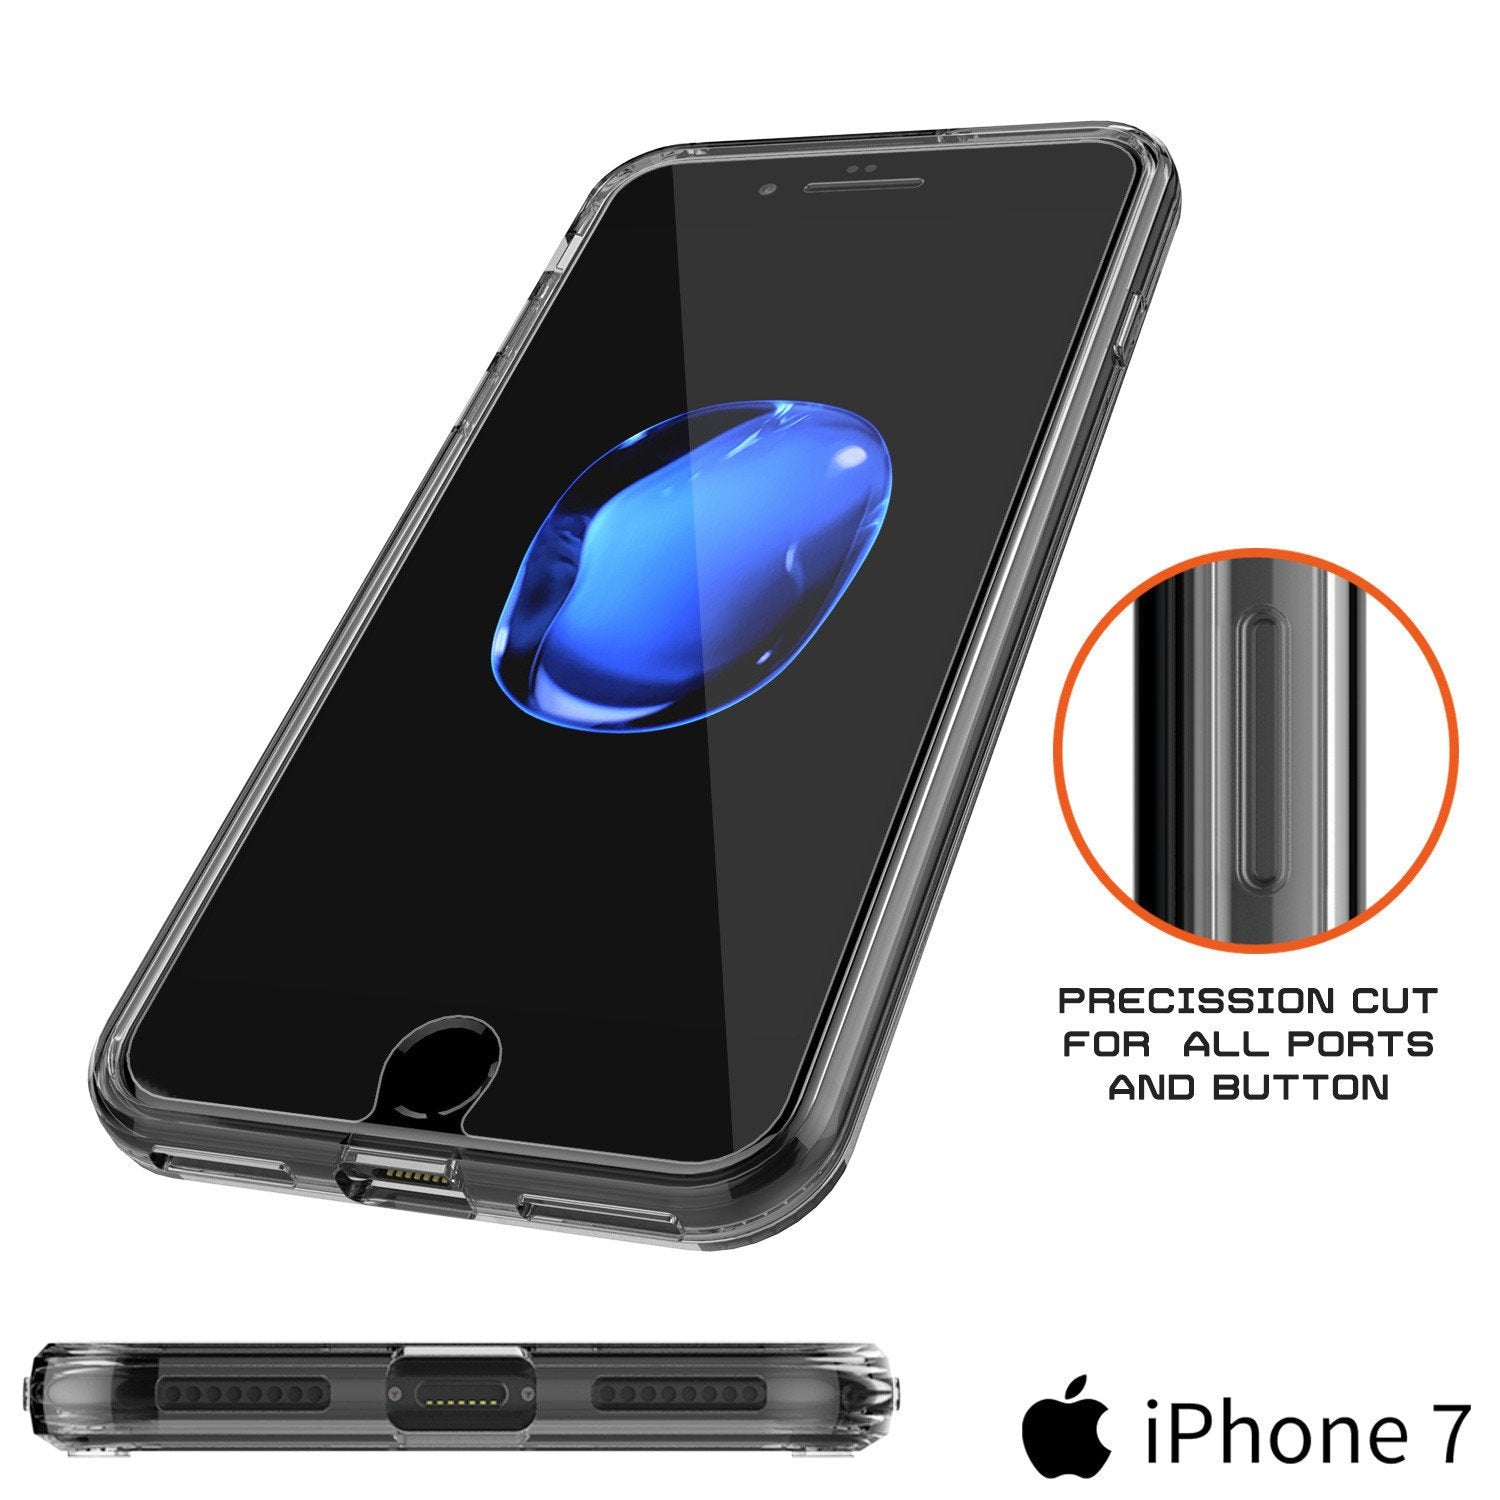 iPhone 7+ Plus Case Punkcase® LUCID 2.0 Crystal Black Series for Apple iPhone 7+ Plus Slim | Slick Frame Lifetime Warranty Exchange